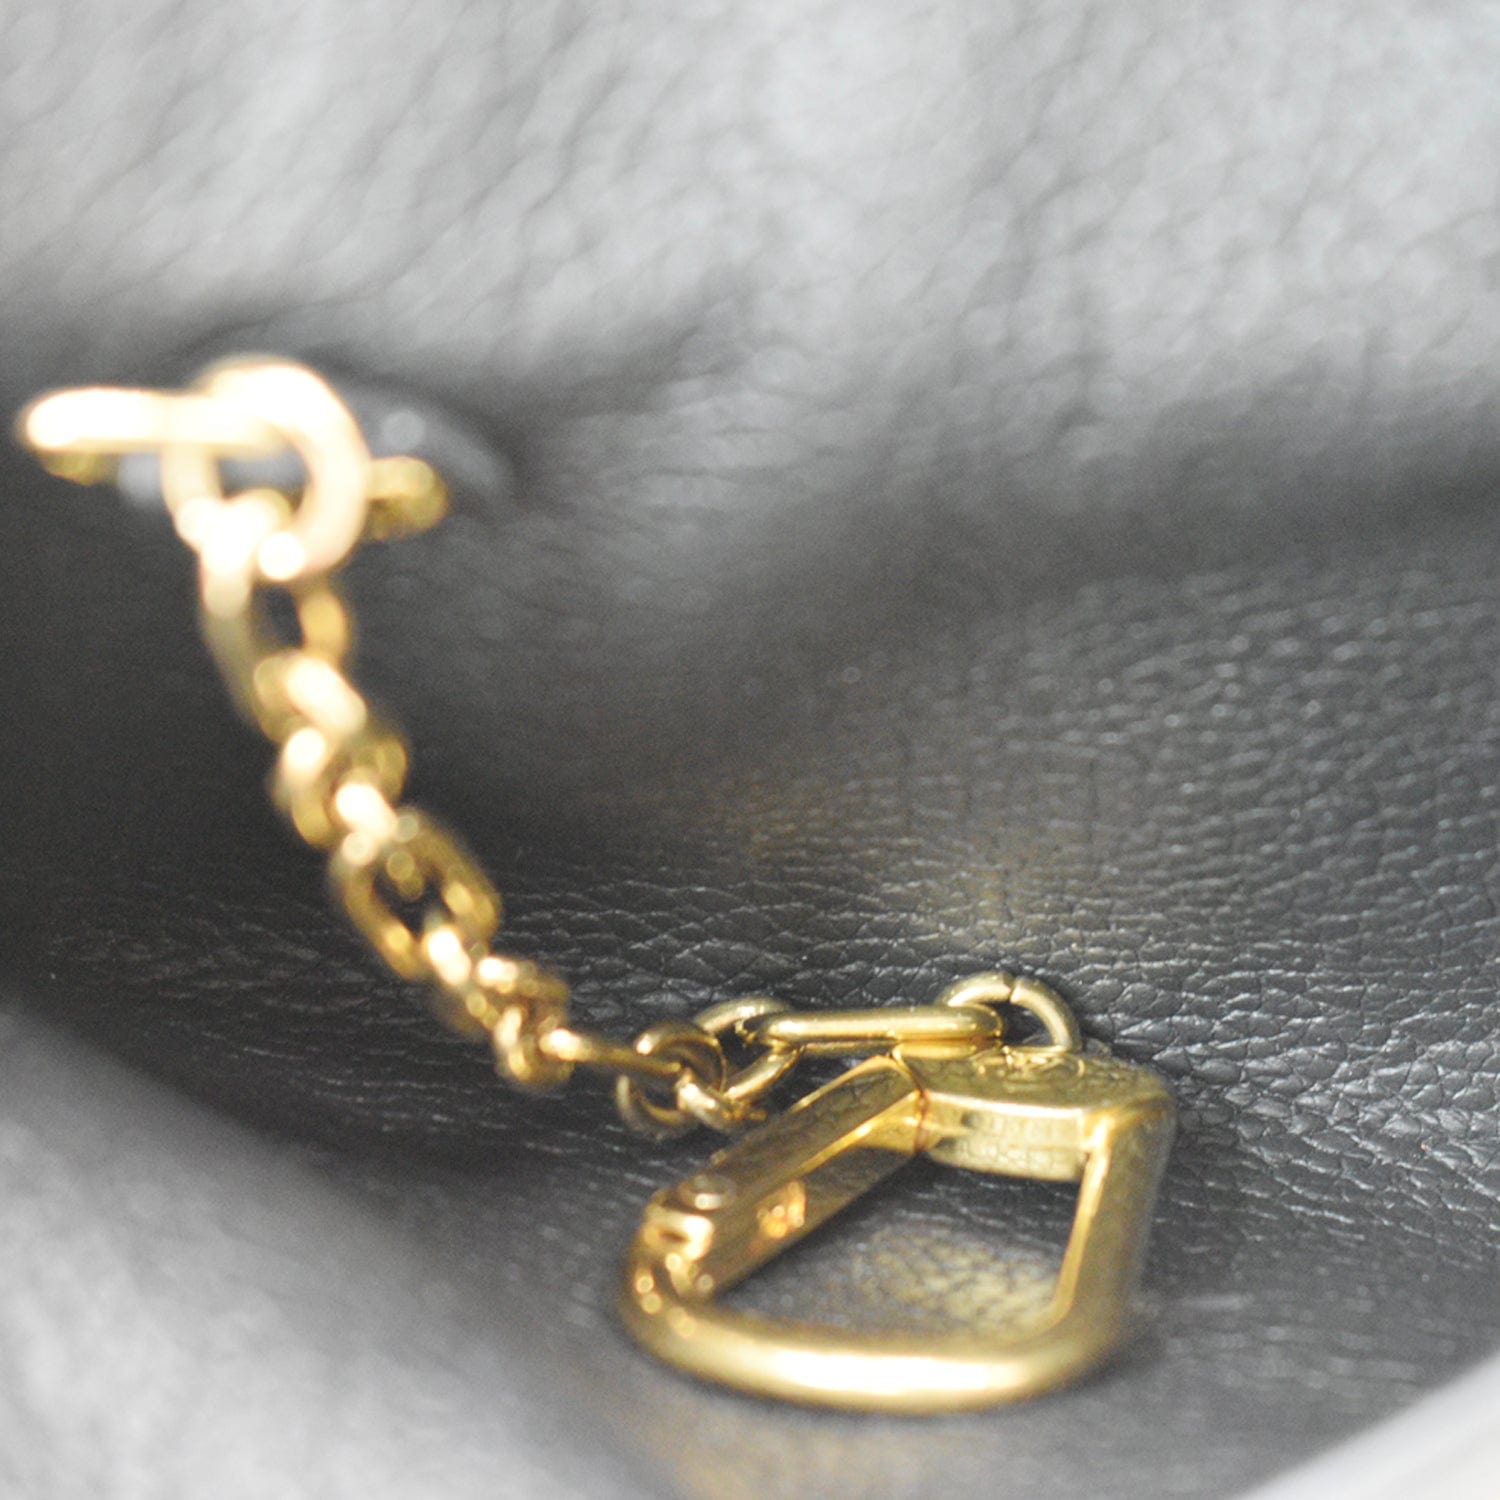 Louis Vuitton Key Pouch in Noir Empreinte - SOLD